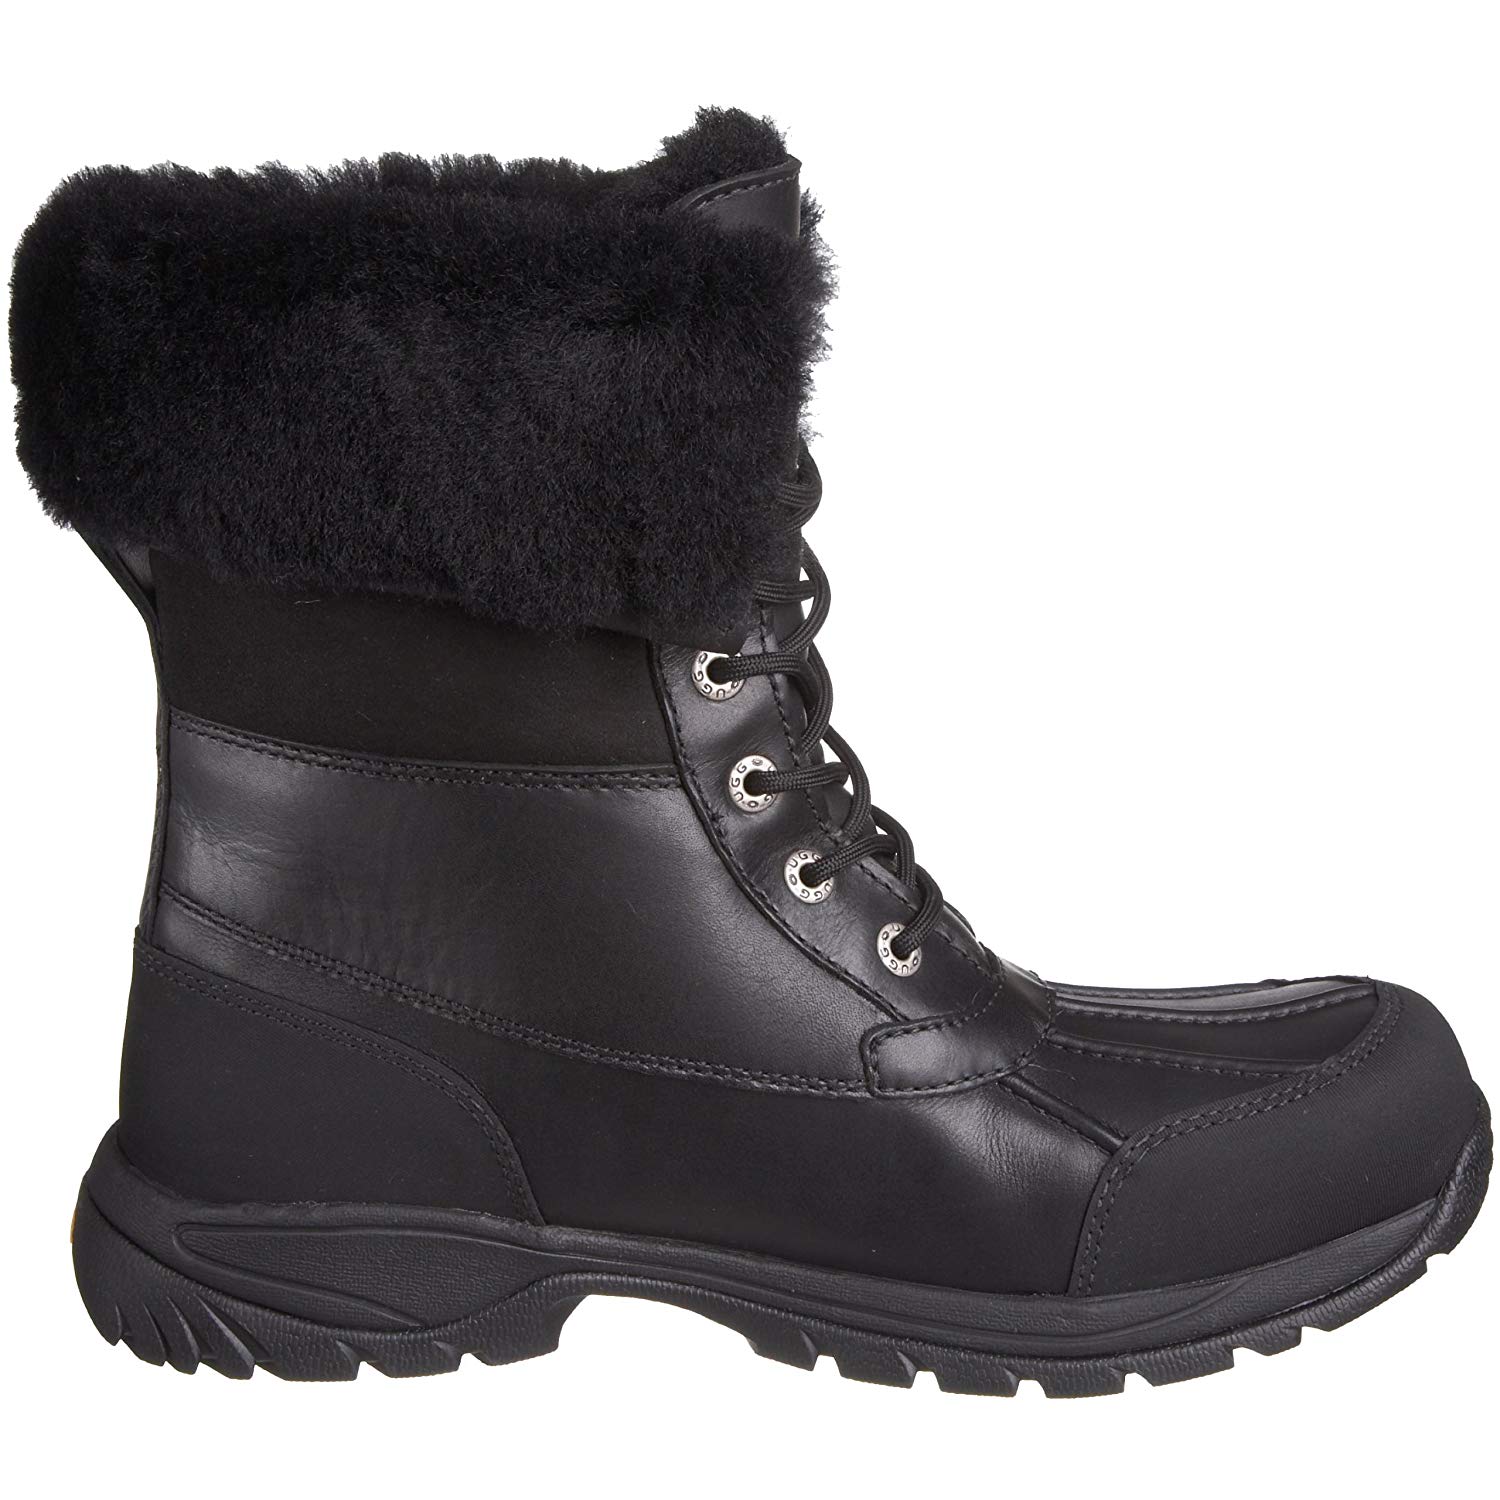 UGG Men's Butte Snow Boot, Black, Size 10.0 UW8g | eBay